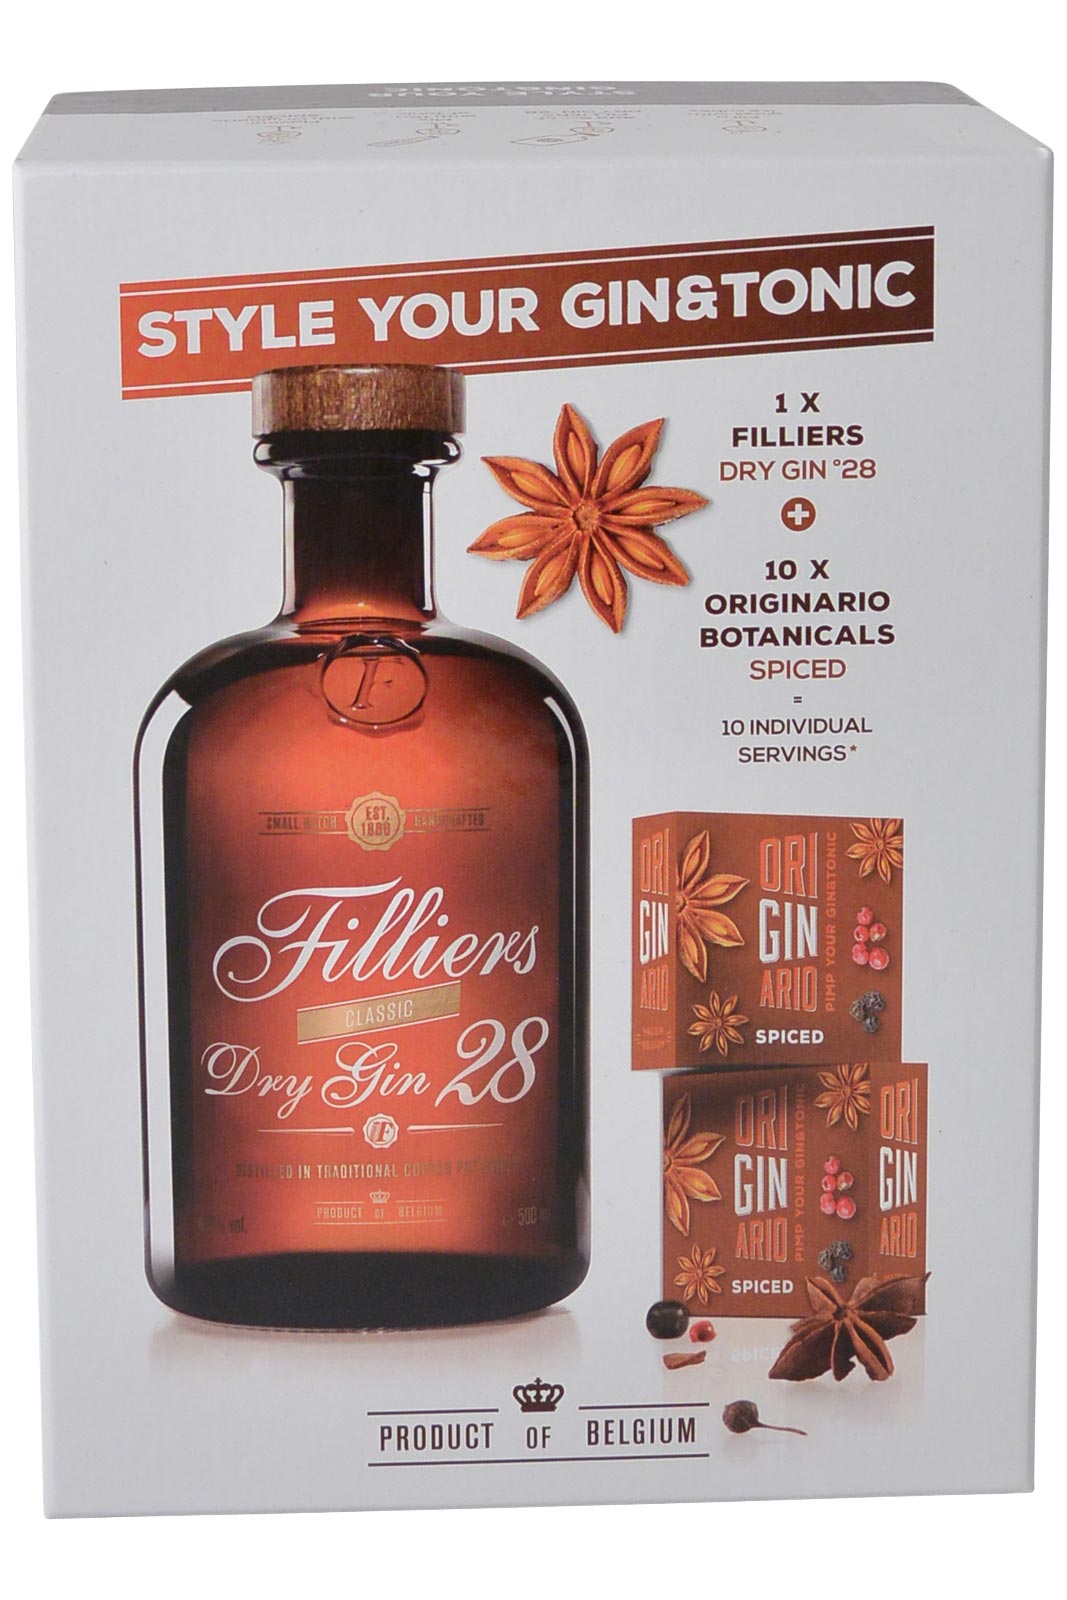 Filliers Dry Gin 28 + 10 x Originario Botanicals Spiced